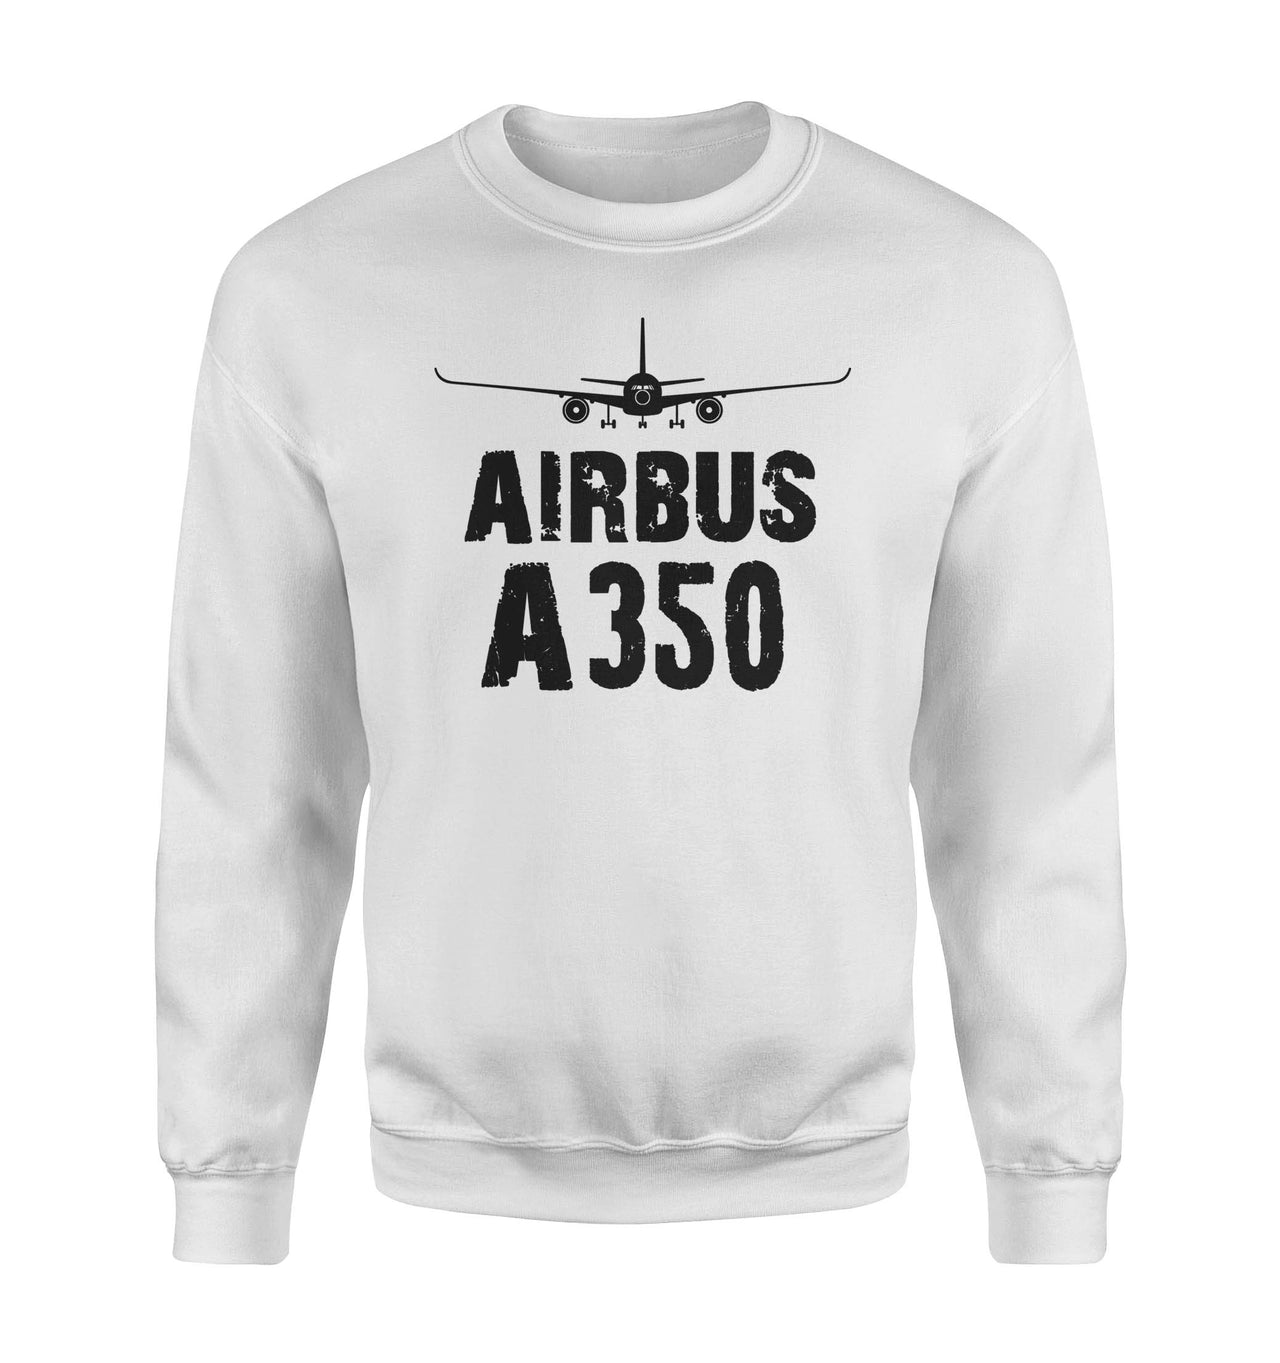 Airbus A350 & Plane Designed Sweatshirts